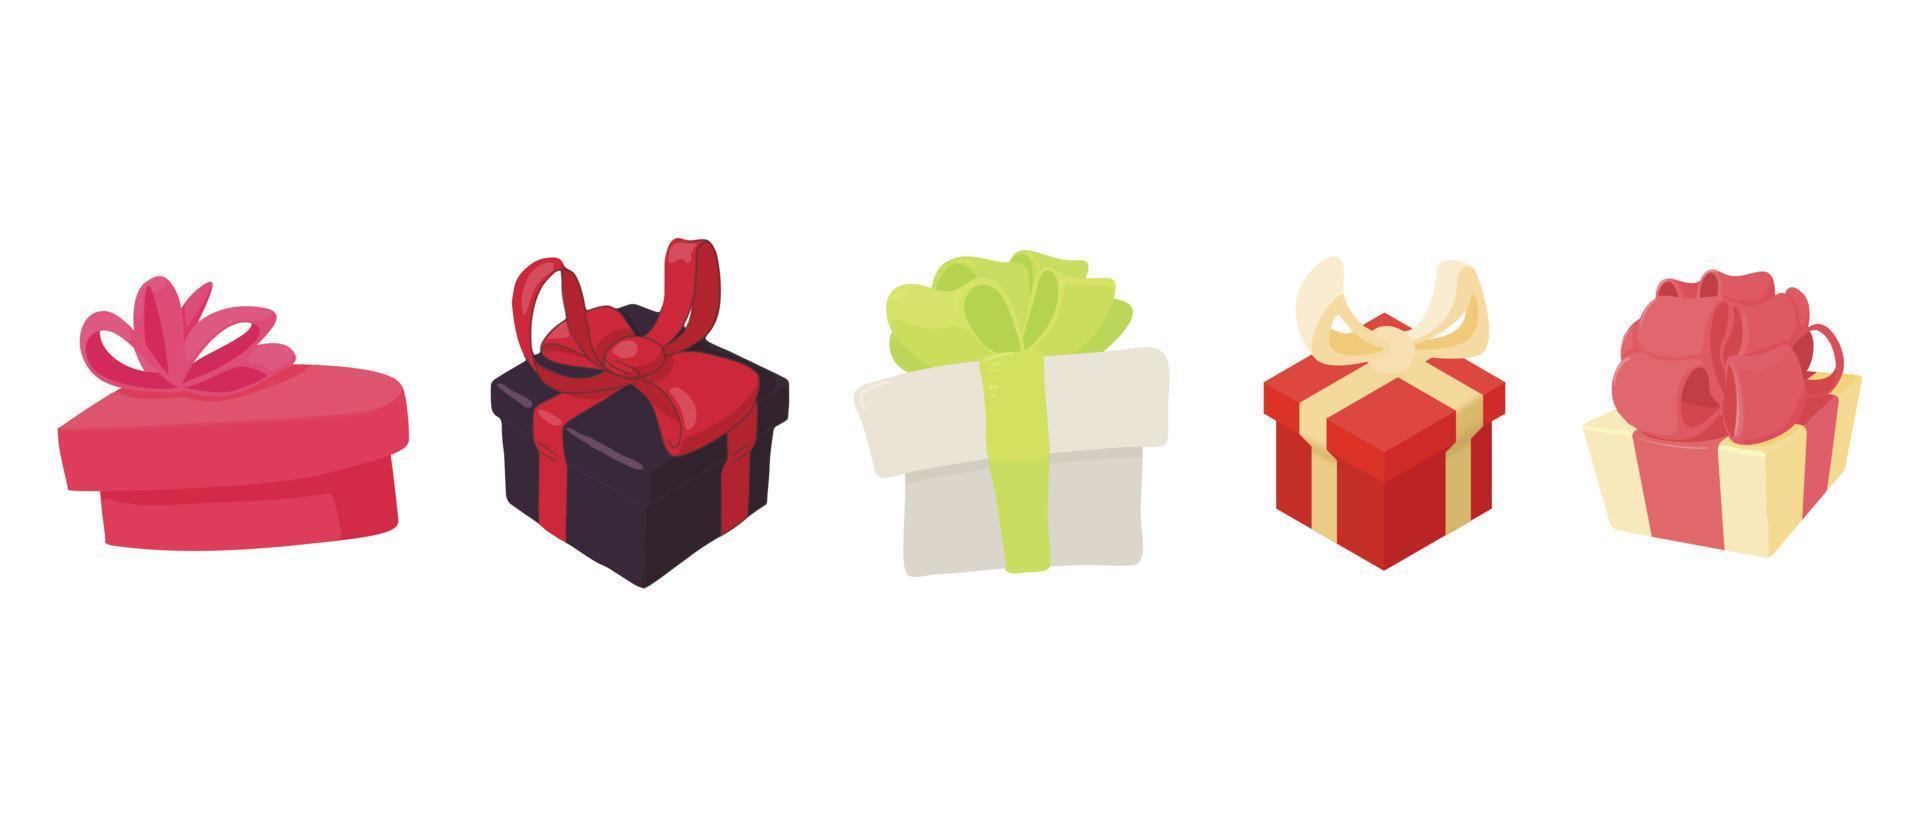 Gift box icon set, cartoon style vector